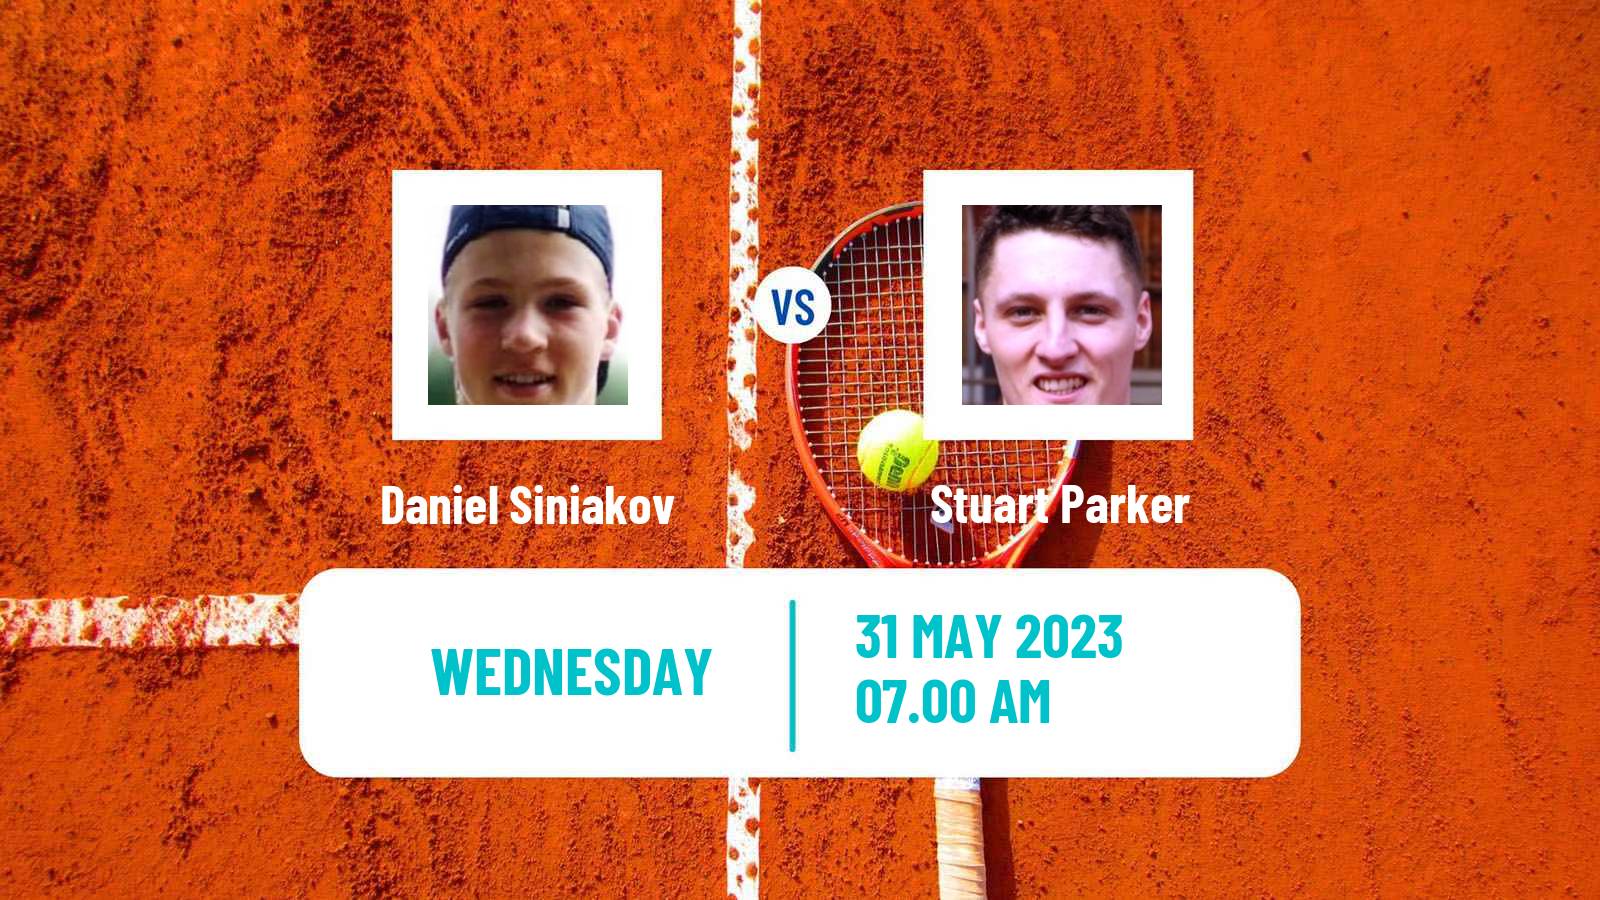 Tennis ITF M25 Jablonec Nad Nisou Men Daniel Siniakov - Stuart Parker